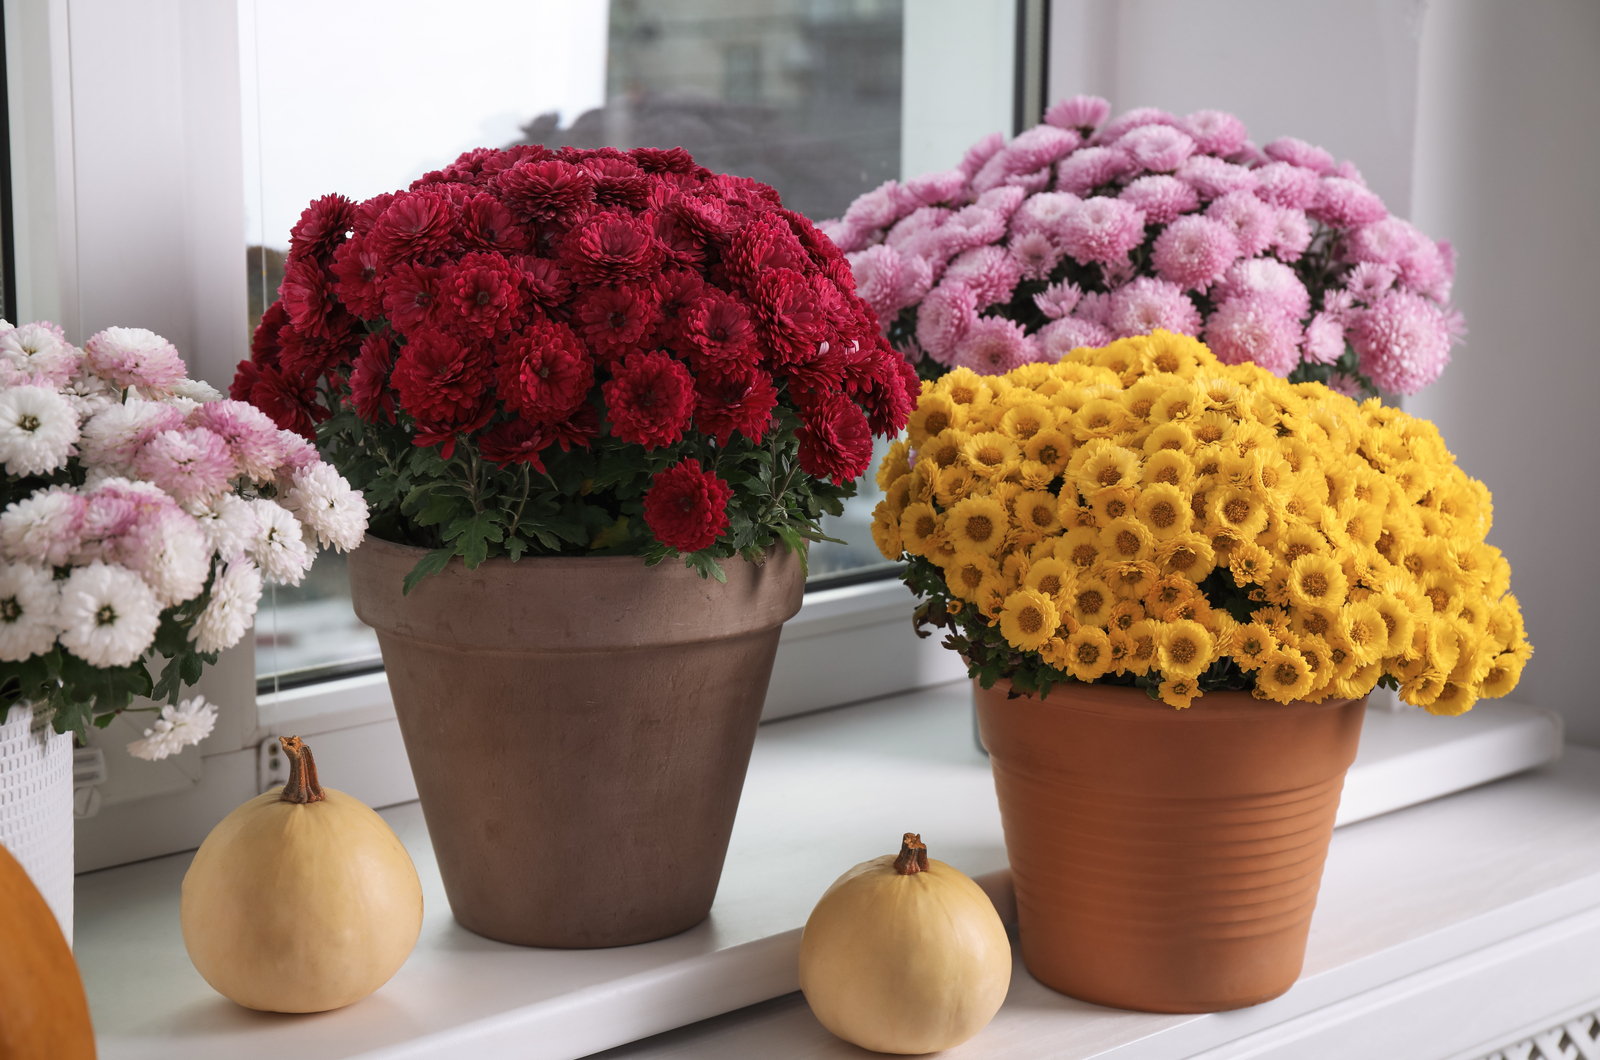 chrysanthemum flowers and pumpkins on windowsill indoors